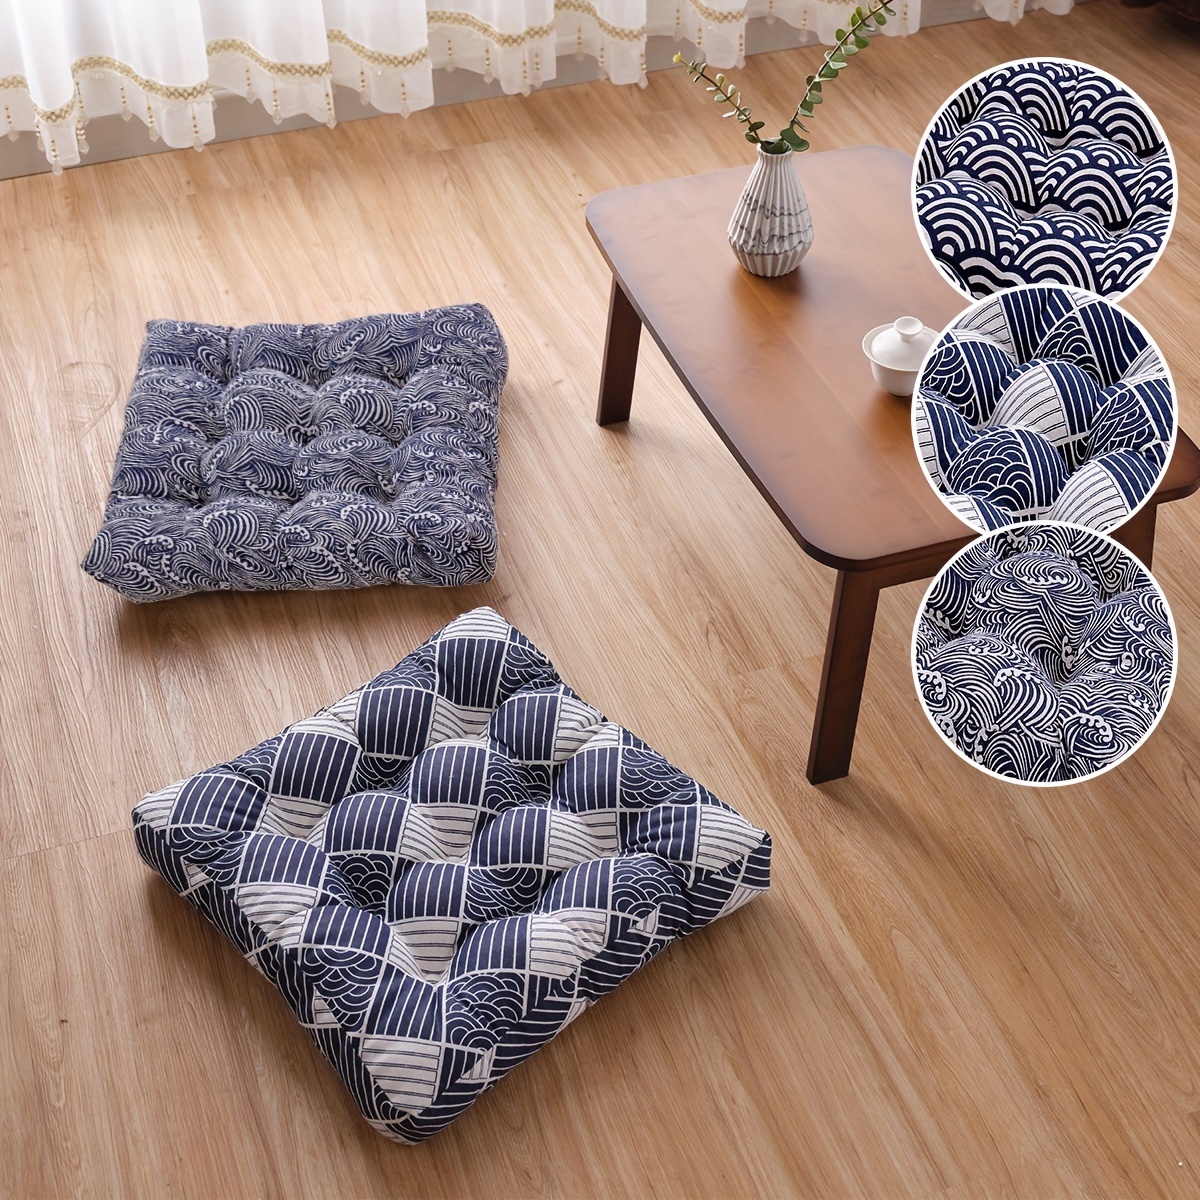 Japanese Tatami Mat Cotton Carpet Living Room Bedroom Rugs Non-slip Floor  Mats Window Cushion Yoga Mat Baby Crawling Mat Blanket - Mat - AliExpress